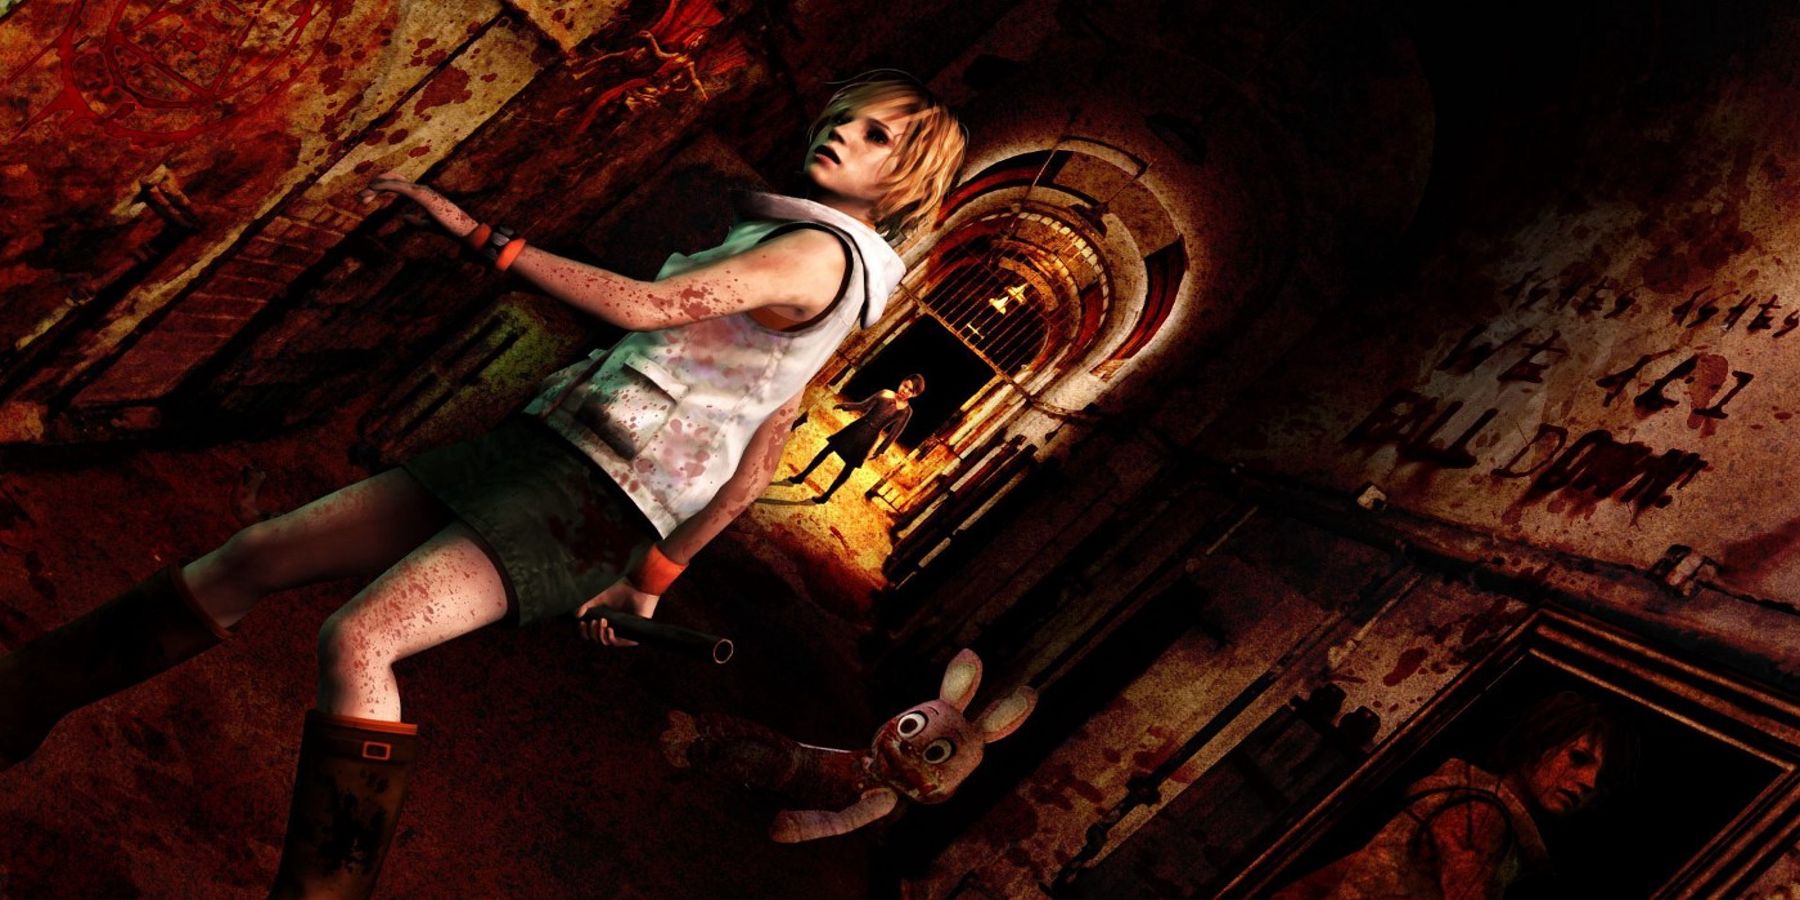 Silent Hill 3's Cheryl Mason fleeing in the Otherworld.